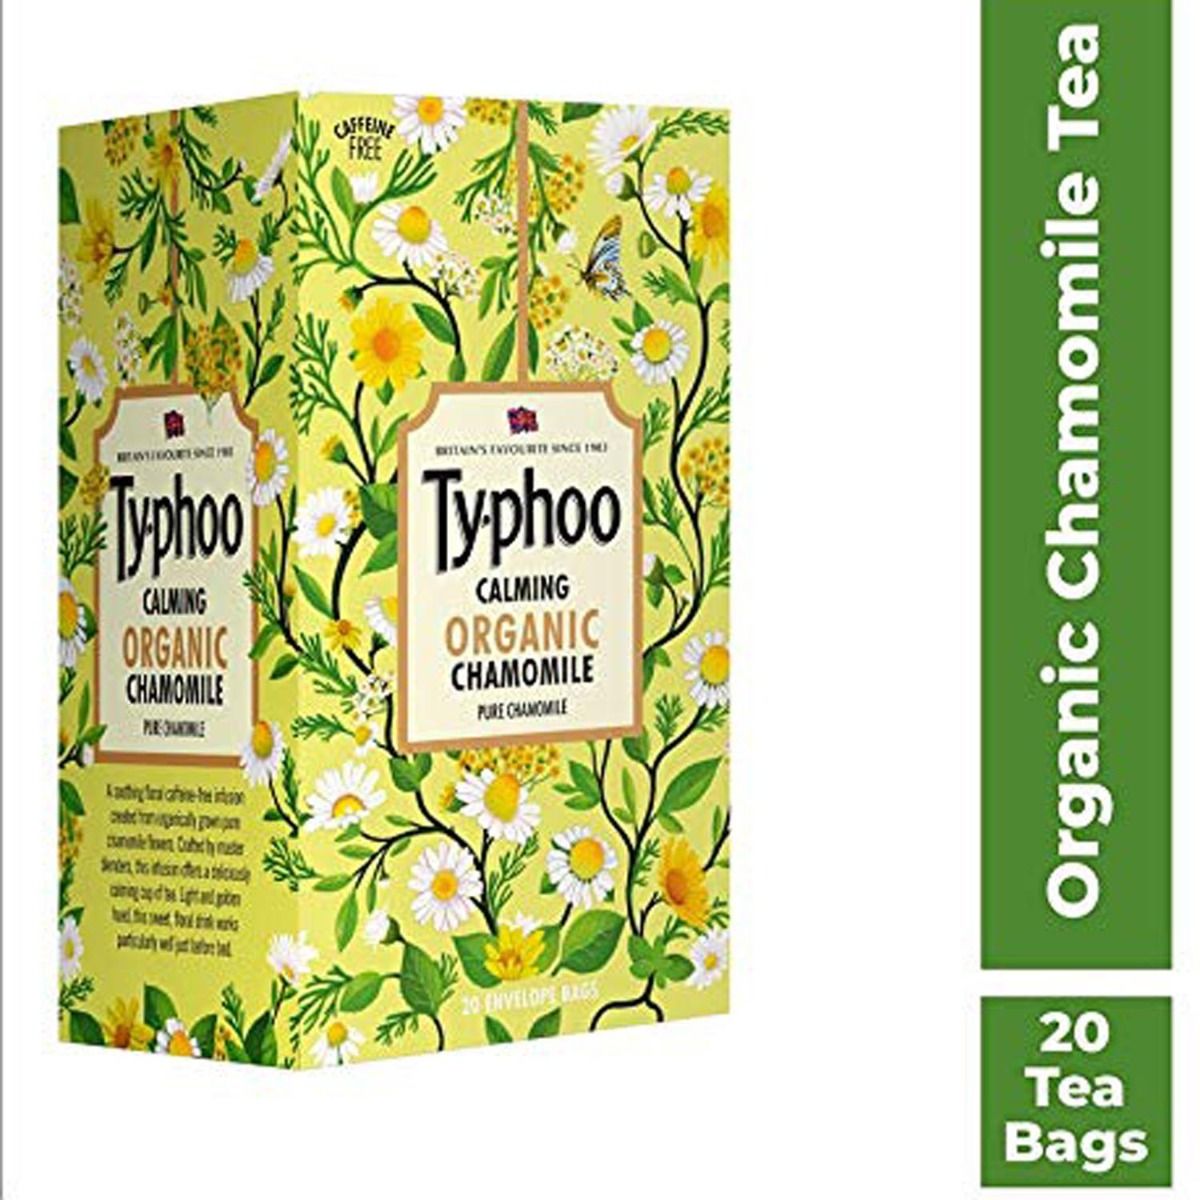 Buy Ty.Phoo Calming Organic Chamomile Tea Bags, 20 Count Online